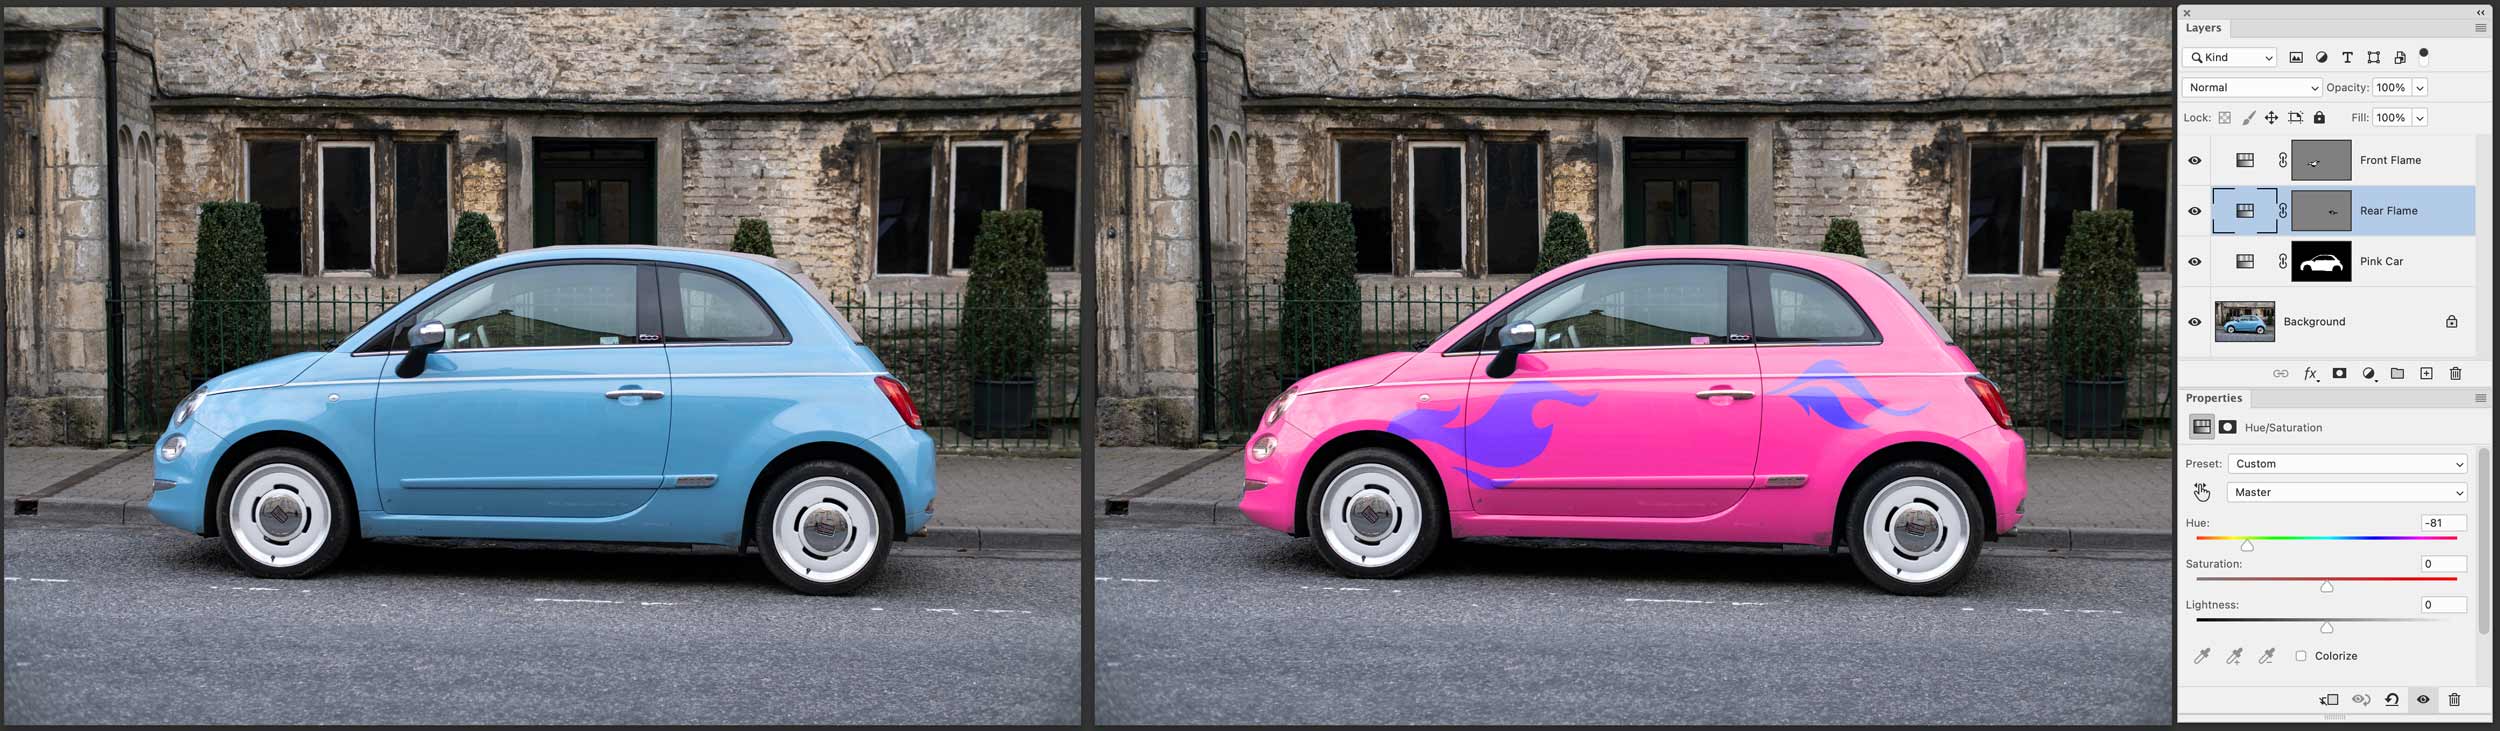 photoshop-adjustment-layers-pink-car